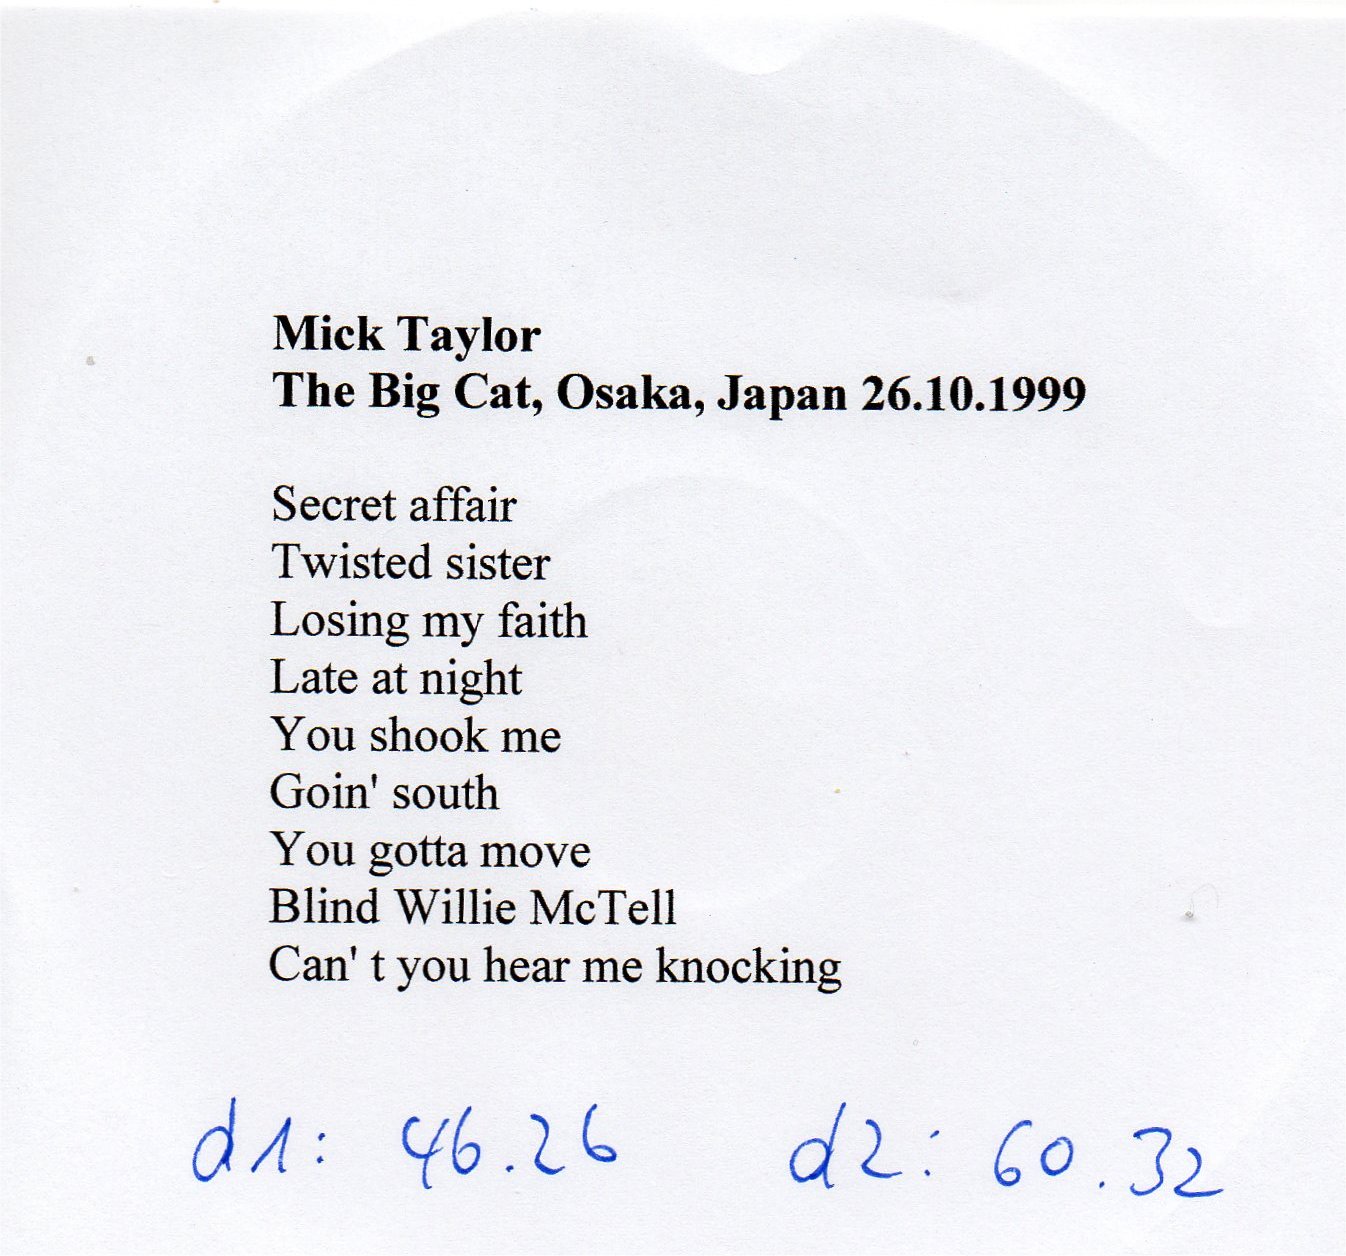 MickTaylor1999-10-26BigCatOsakaJapan (5).jpg